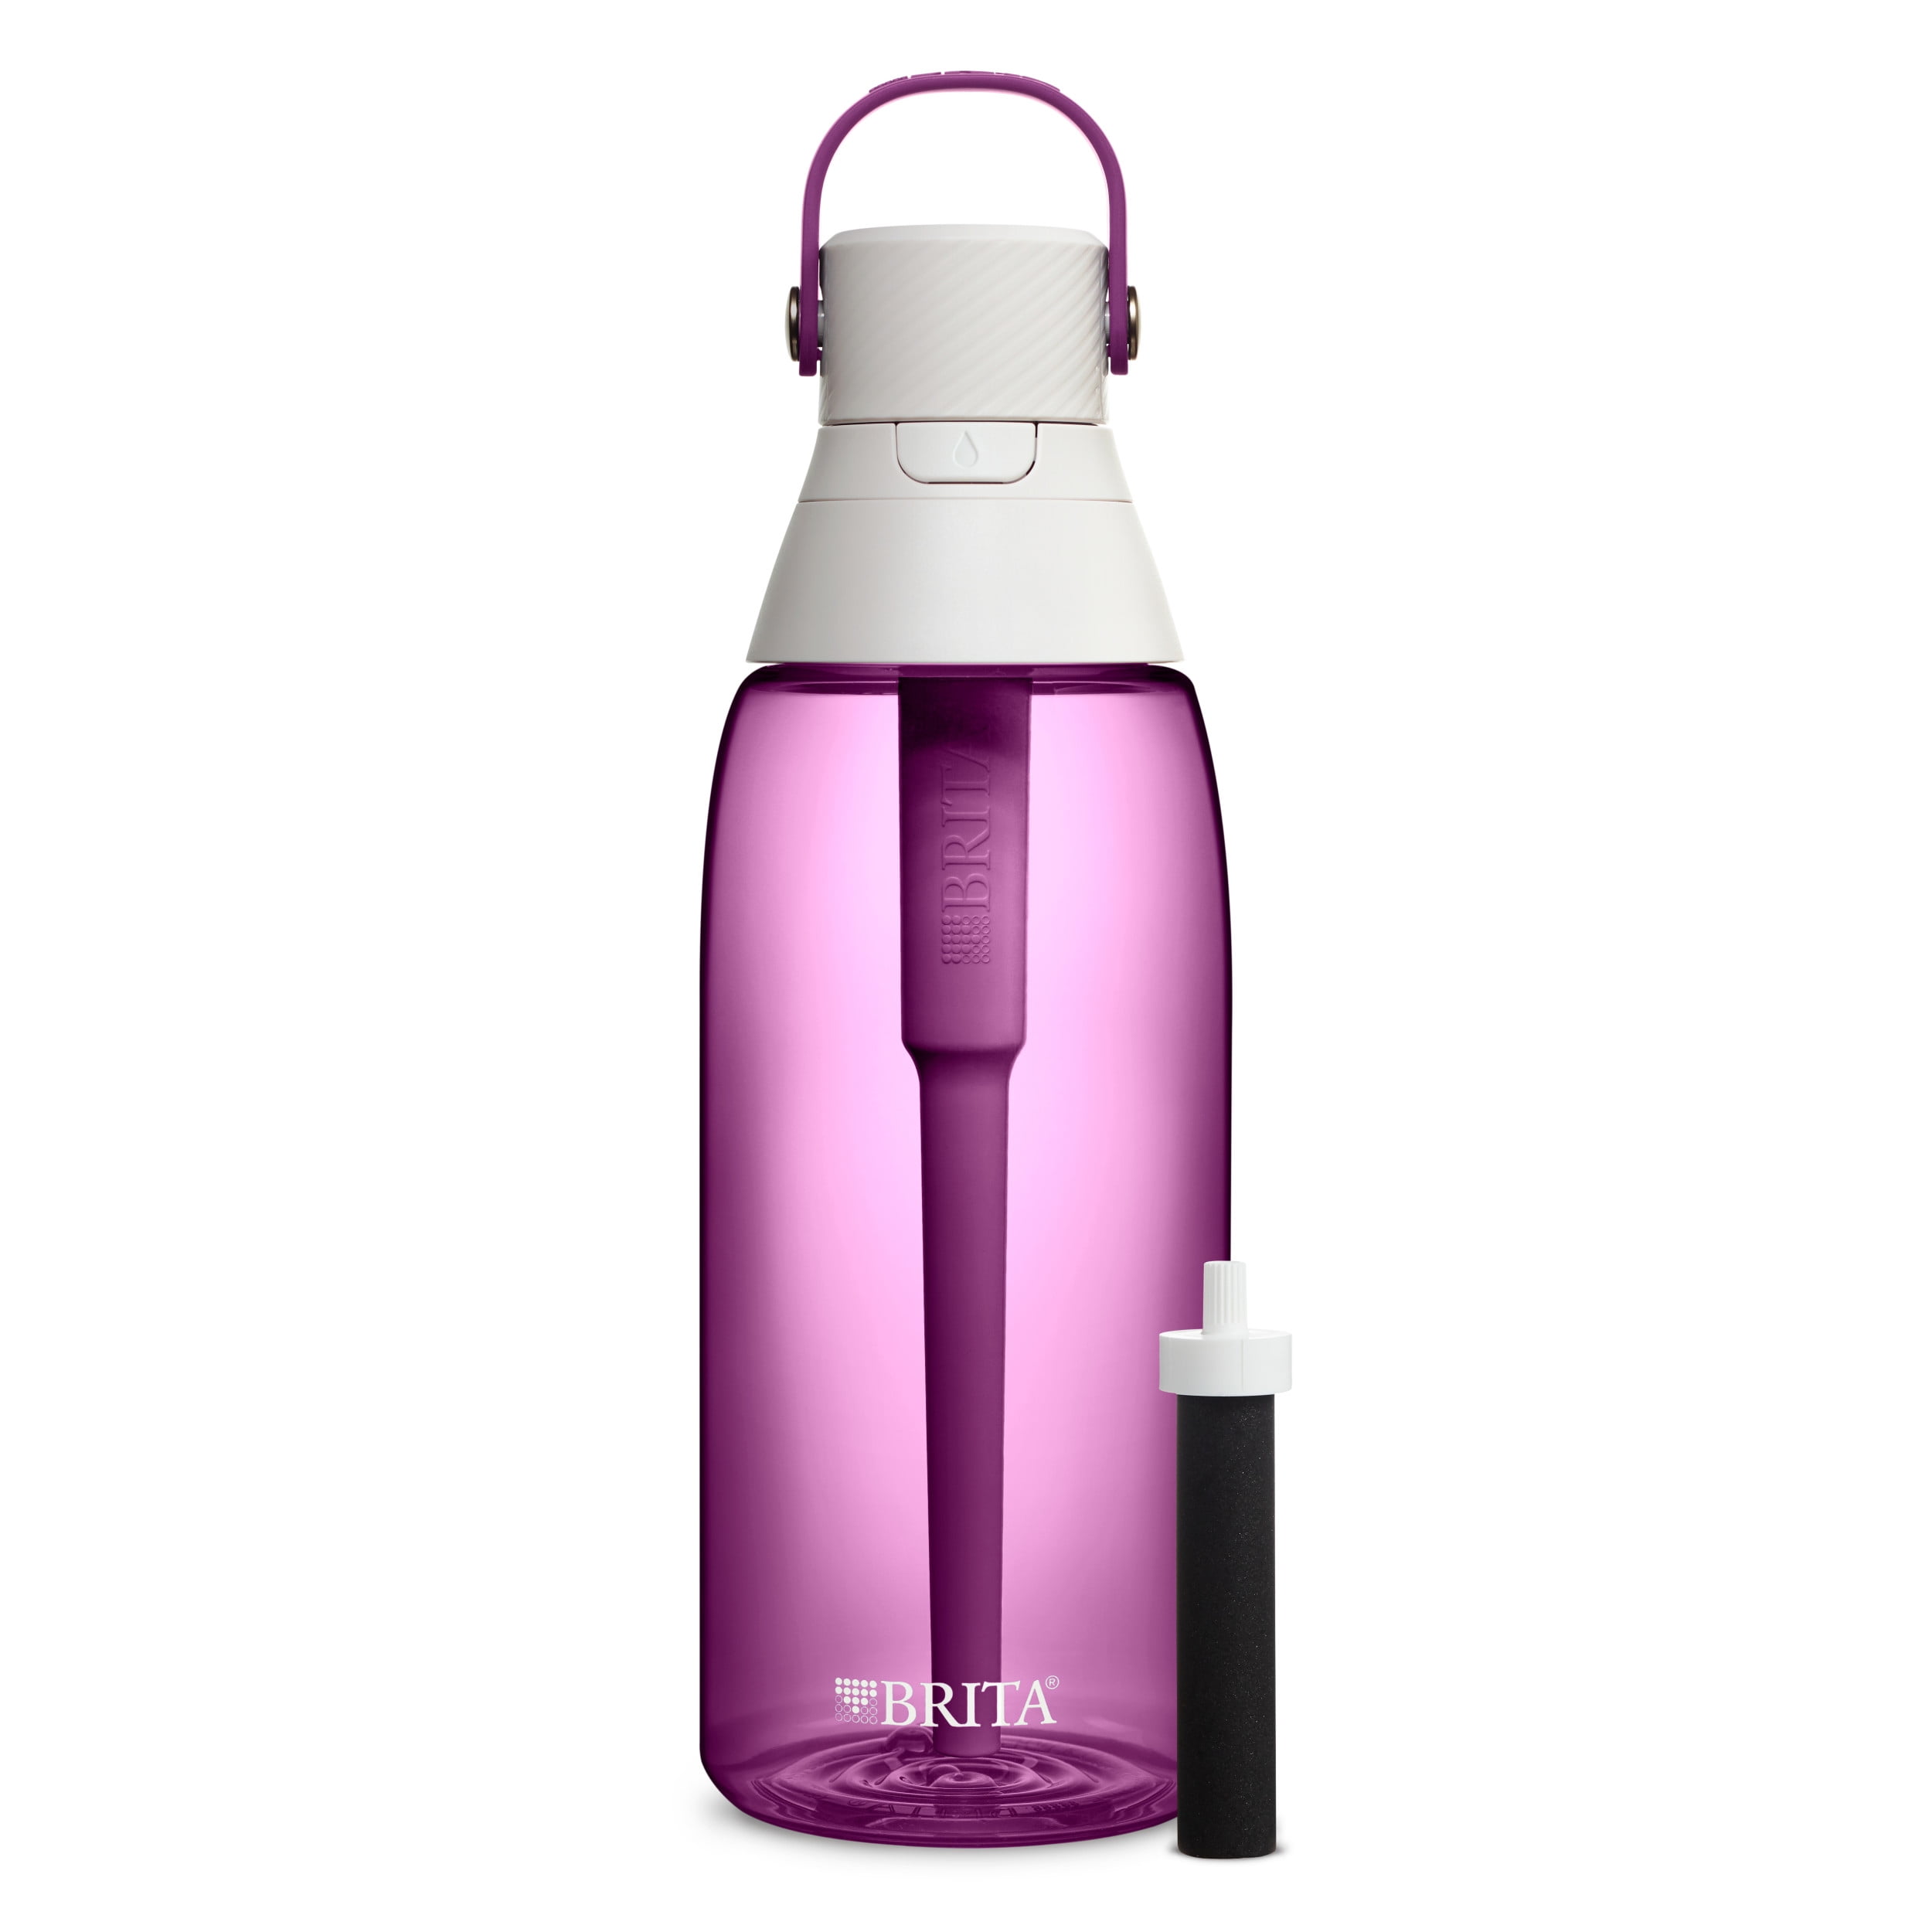 Brita Premium 36 Oz. Filtering Water Bottle In Orchid